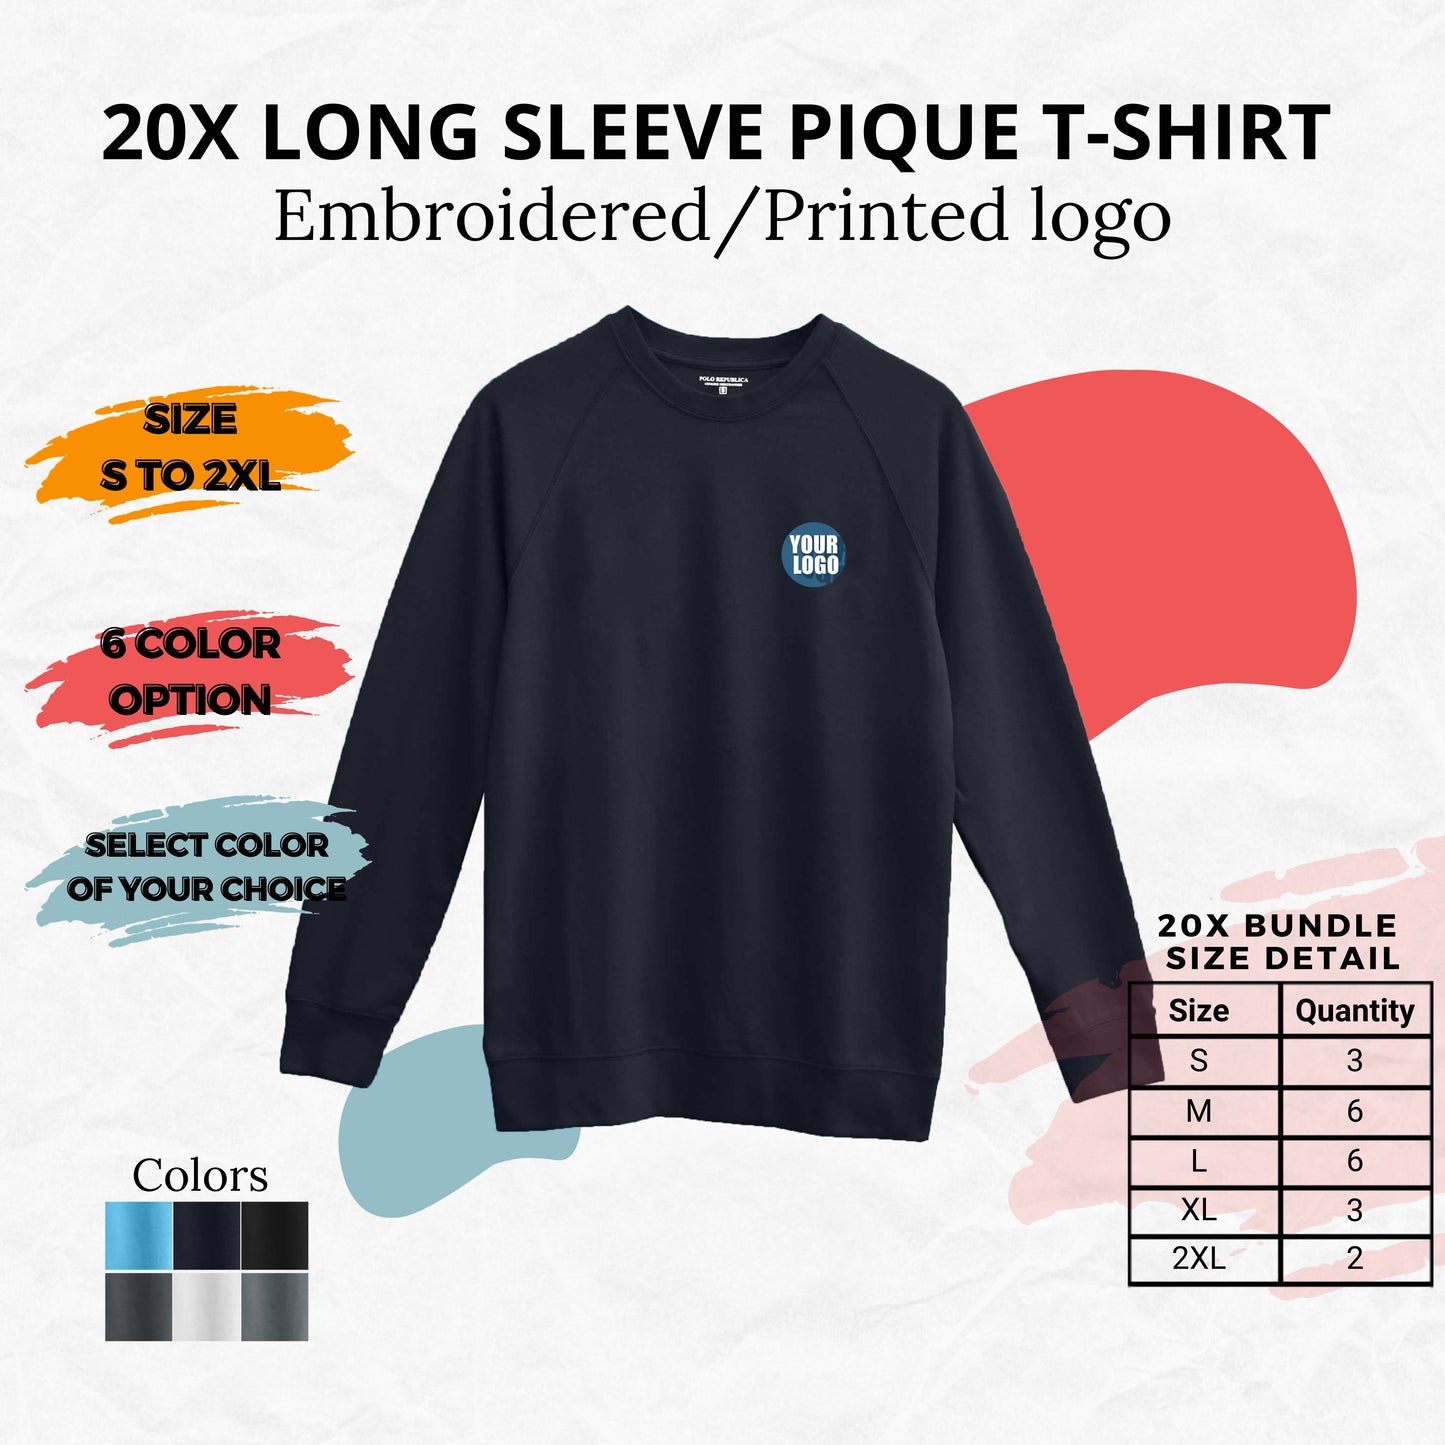 20X Long Sleeve Tee Shirt Bundle. Custom Print/Emb.